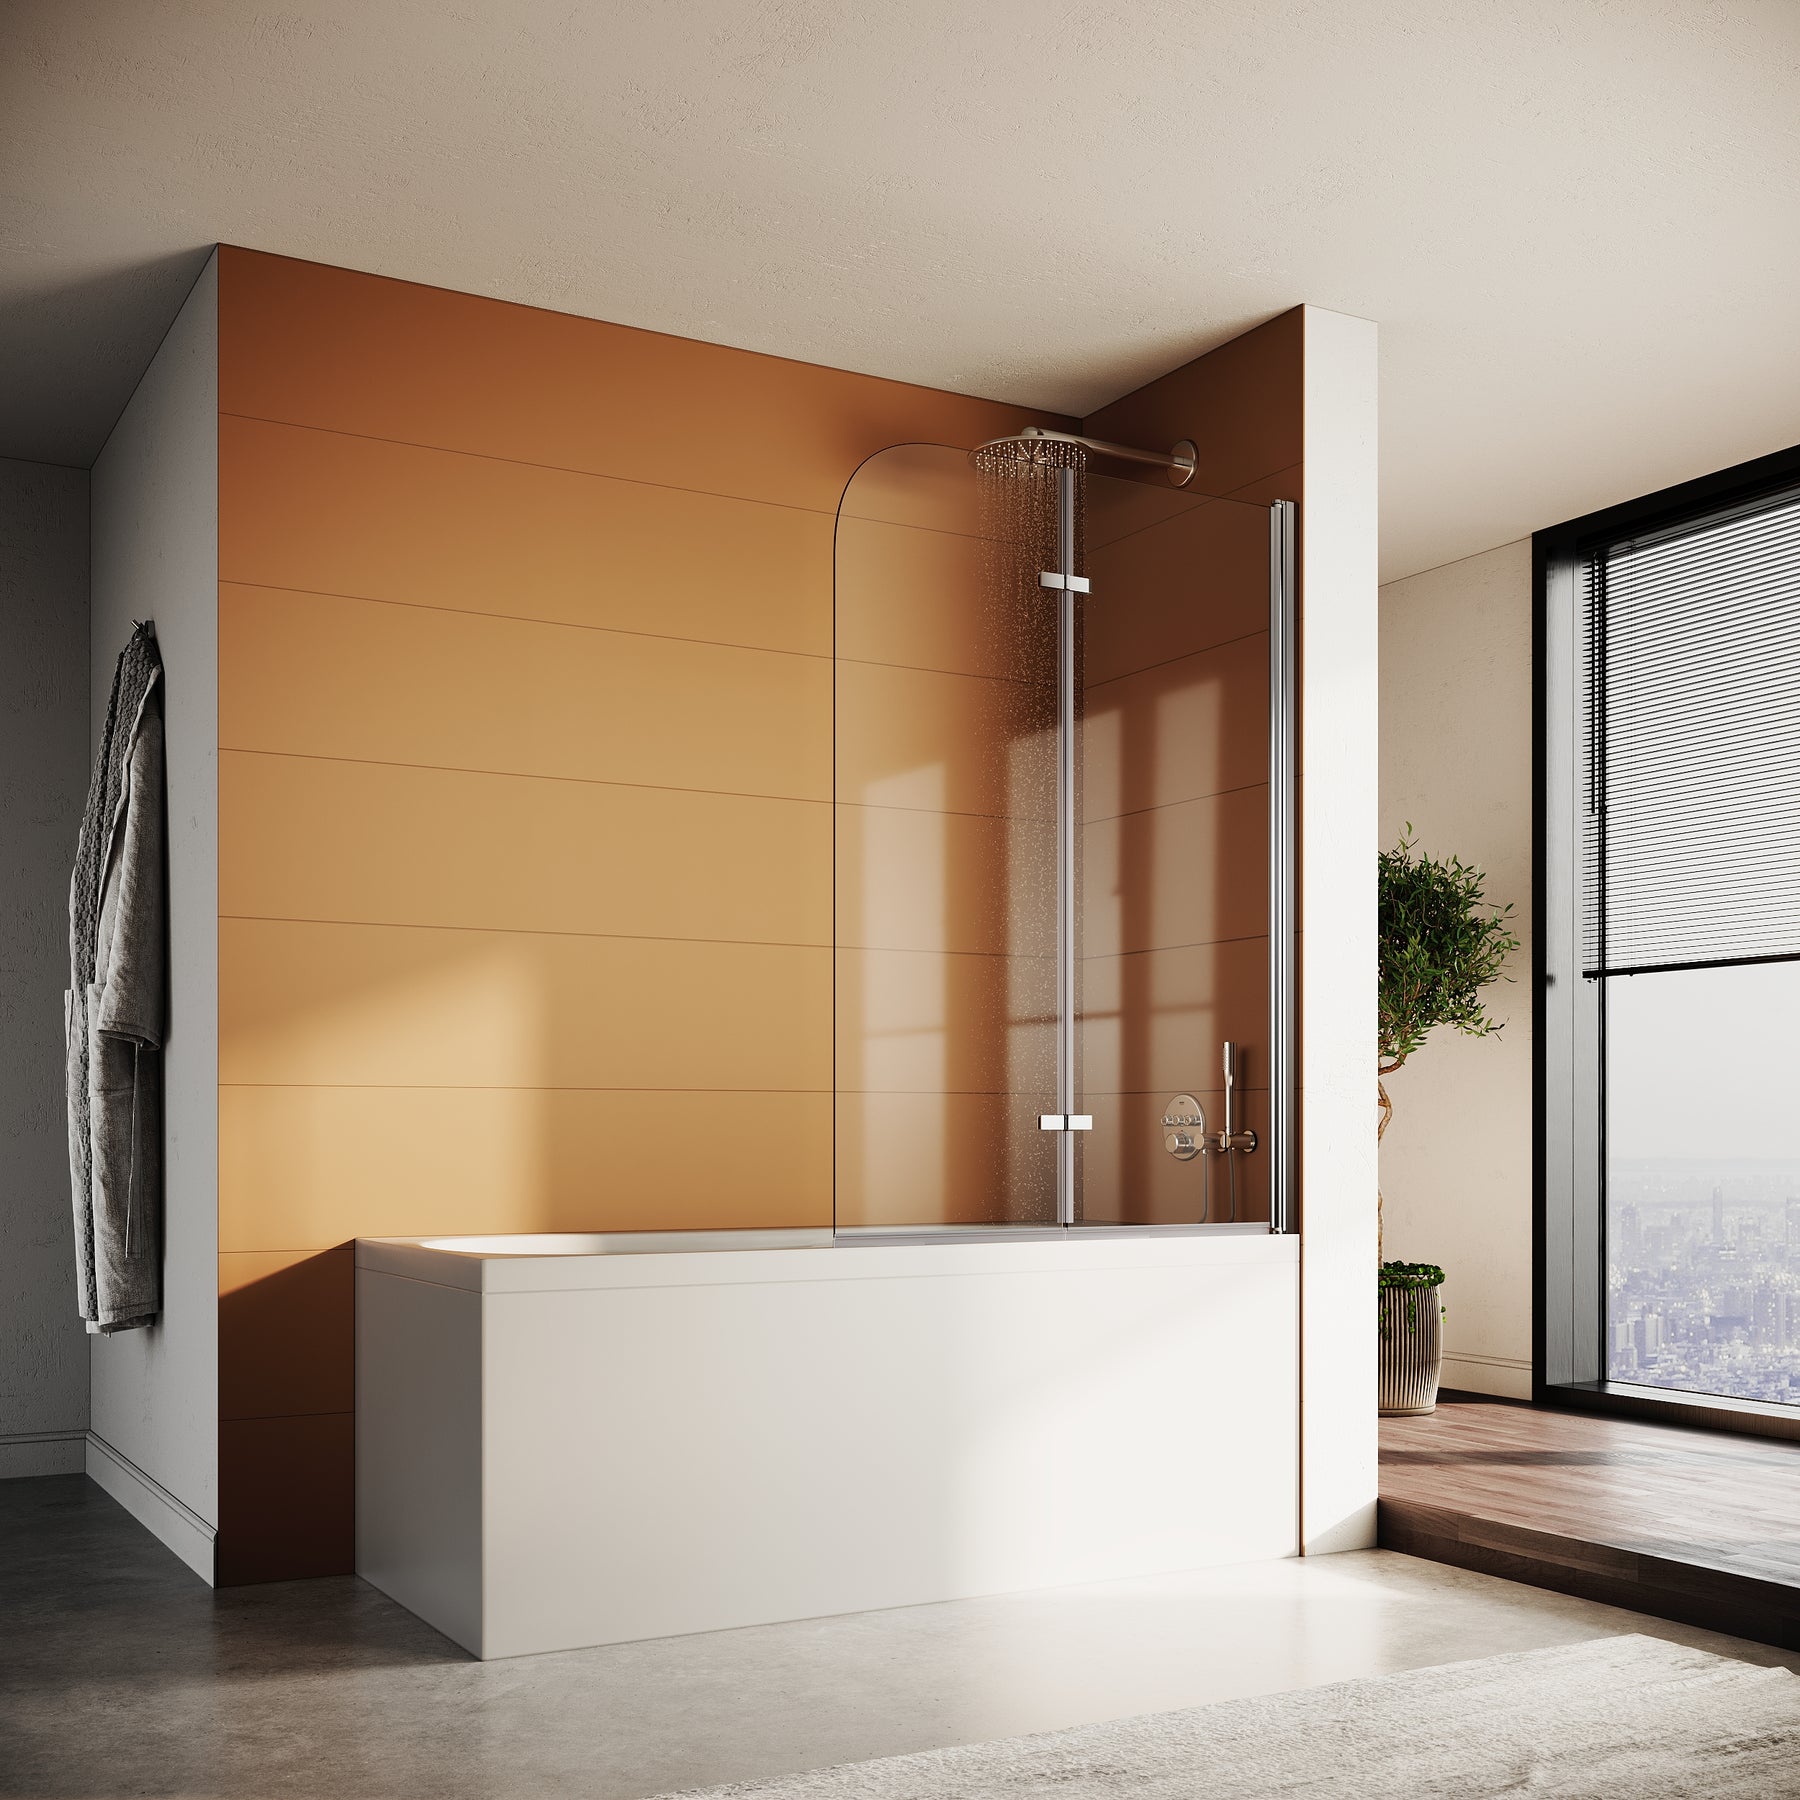 SONNI Duschwand für badewanne 100x130cm Duschwand Glas 6mm Nano Glas 2-Teilig Duschwand Badewanne Faltbar Badewannenaufsatz Duschabtrennung